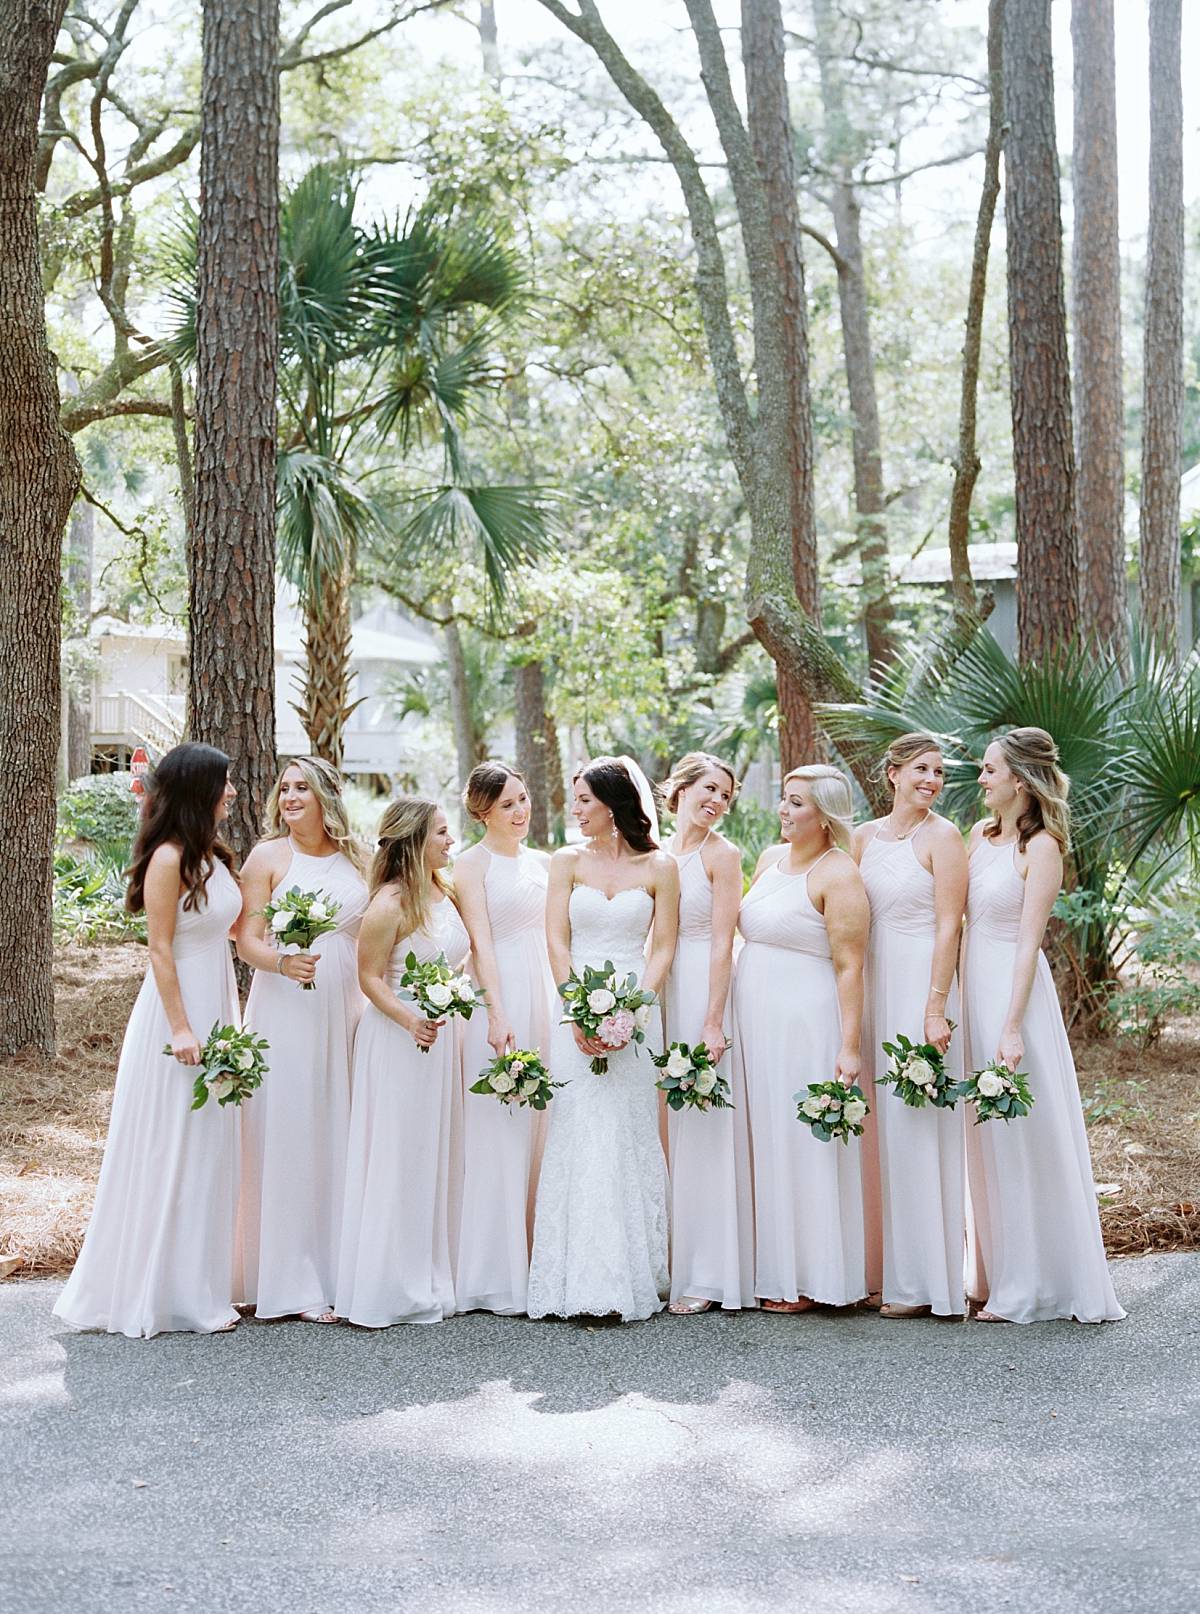 contax 645 bridal party in blush bridesmaids dresses on kiawah island for charleston wedding